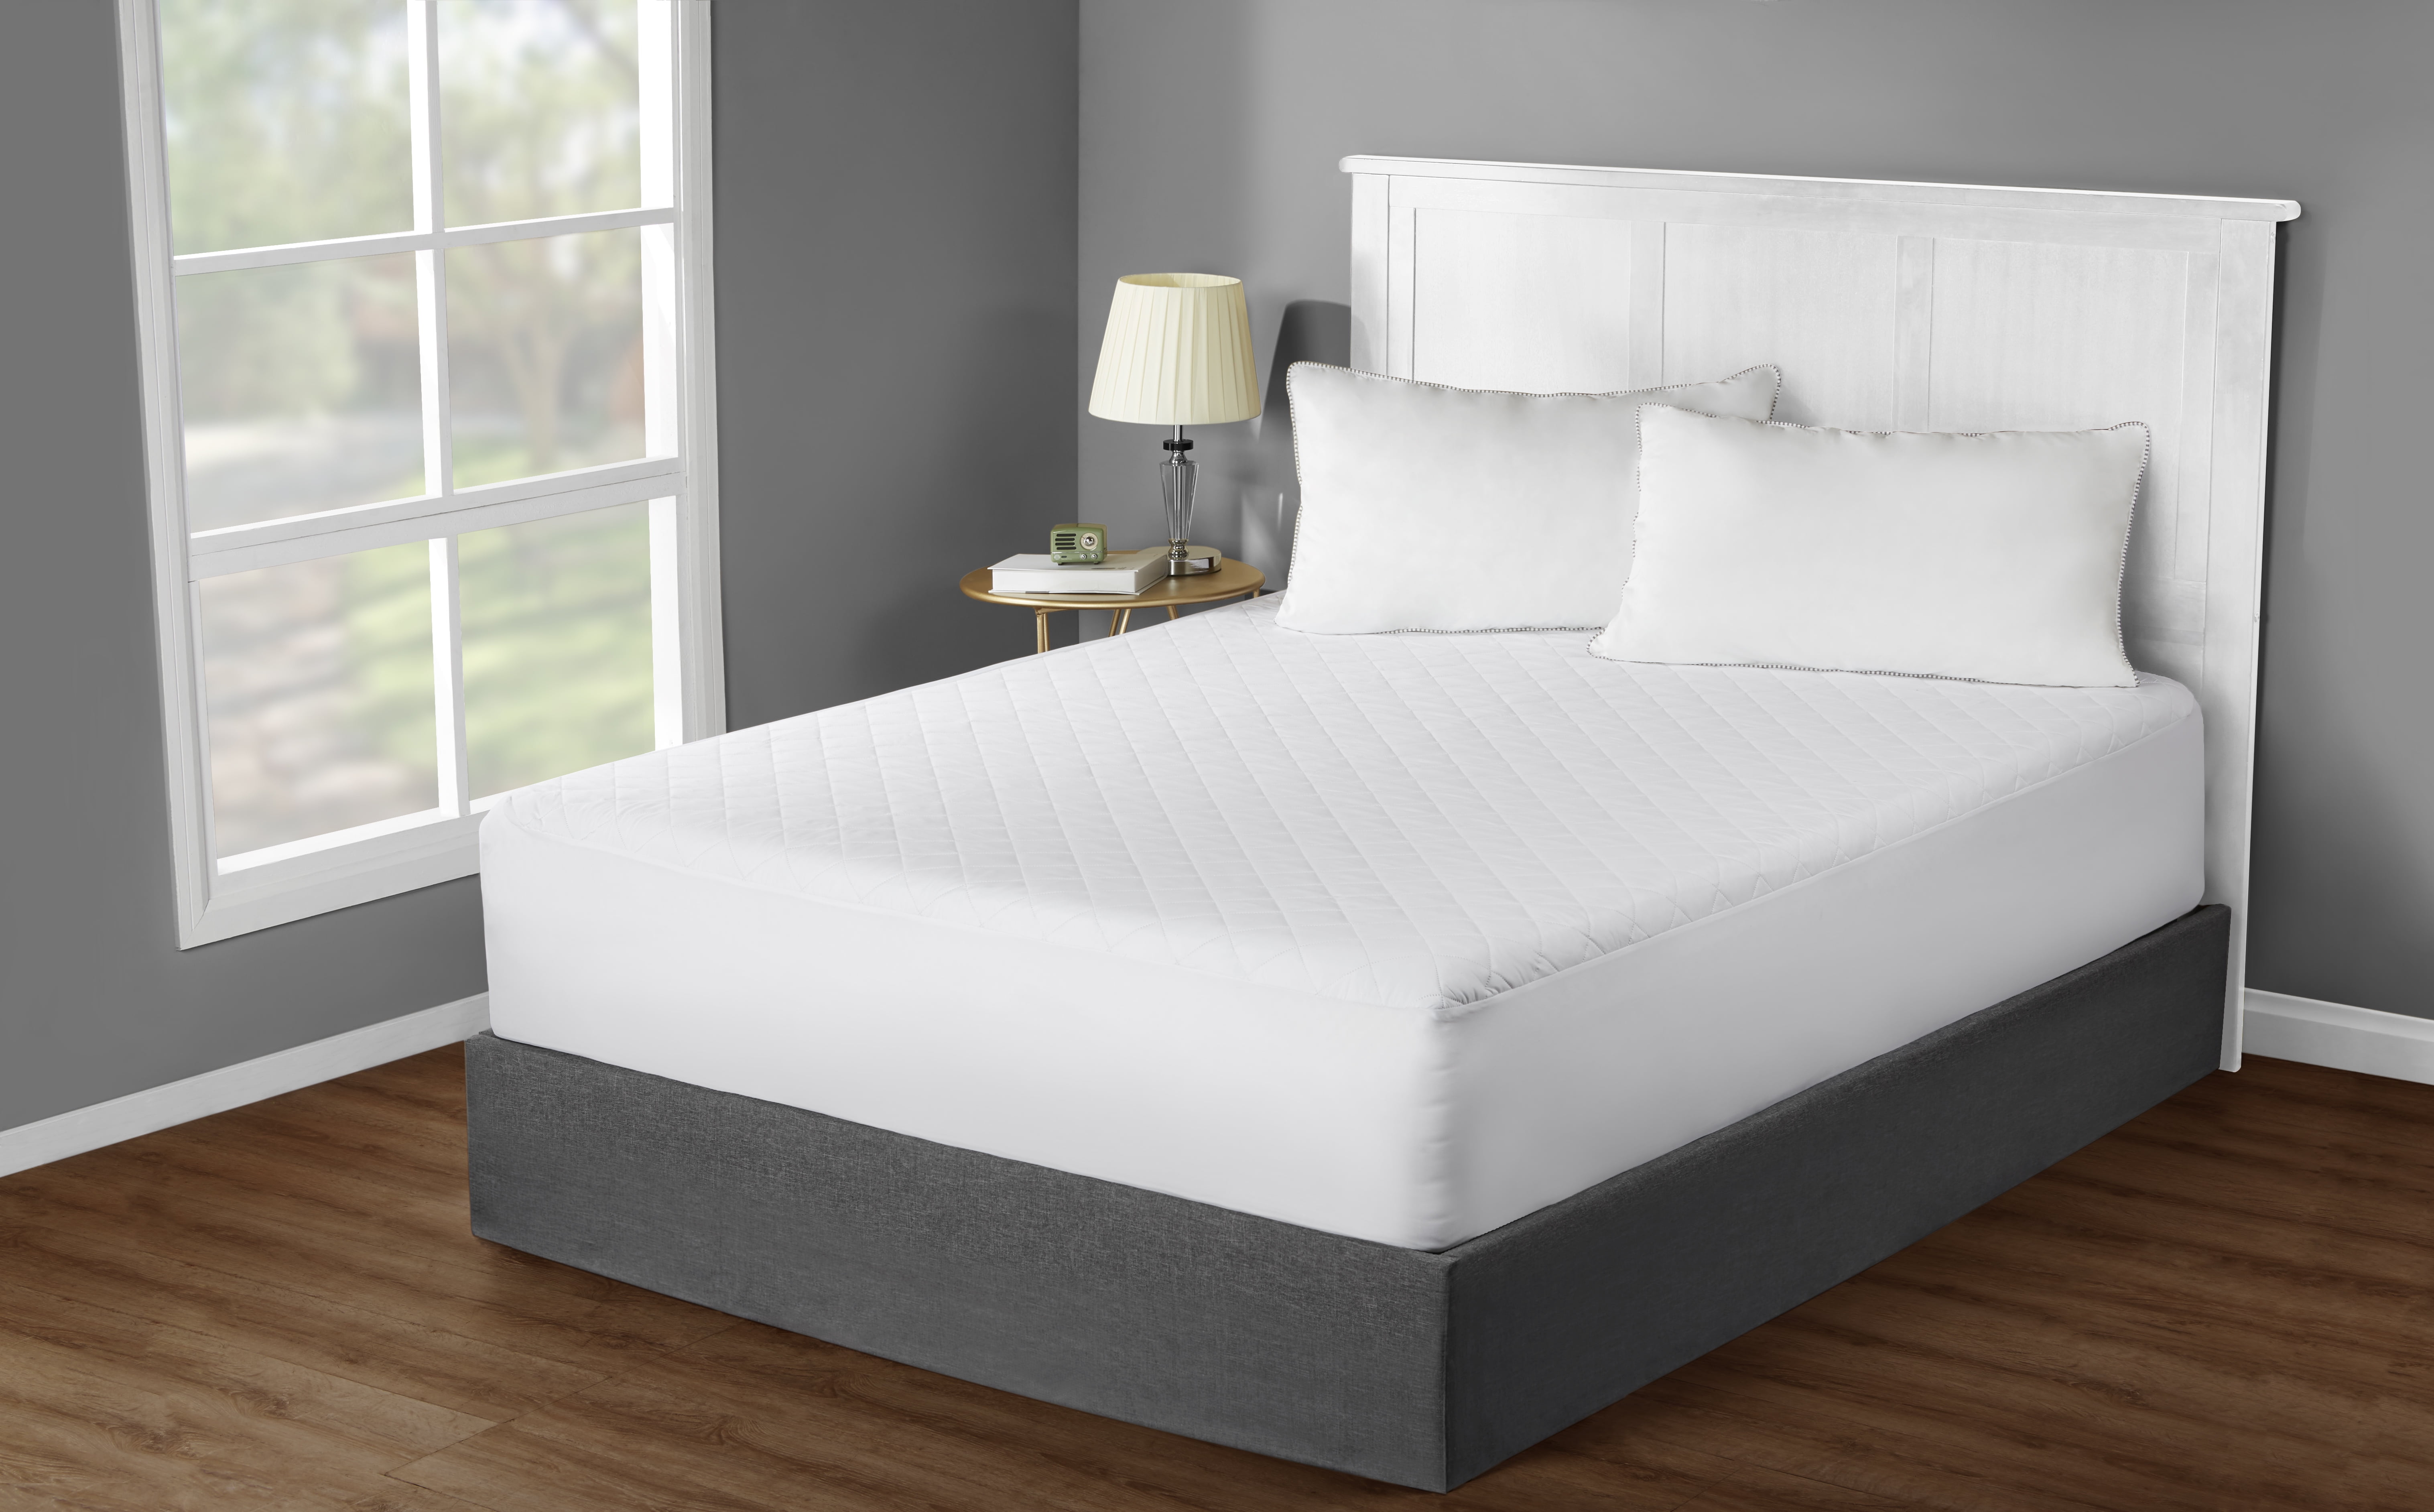 softest bed in a box mattress